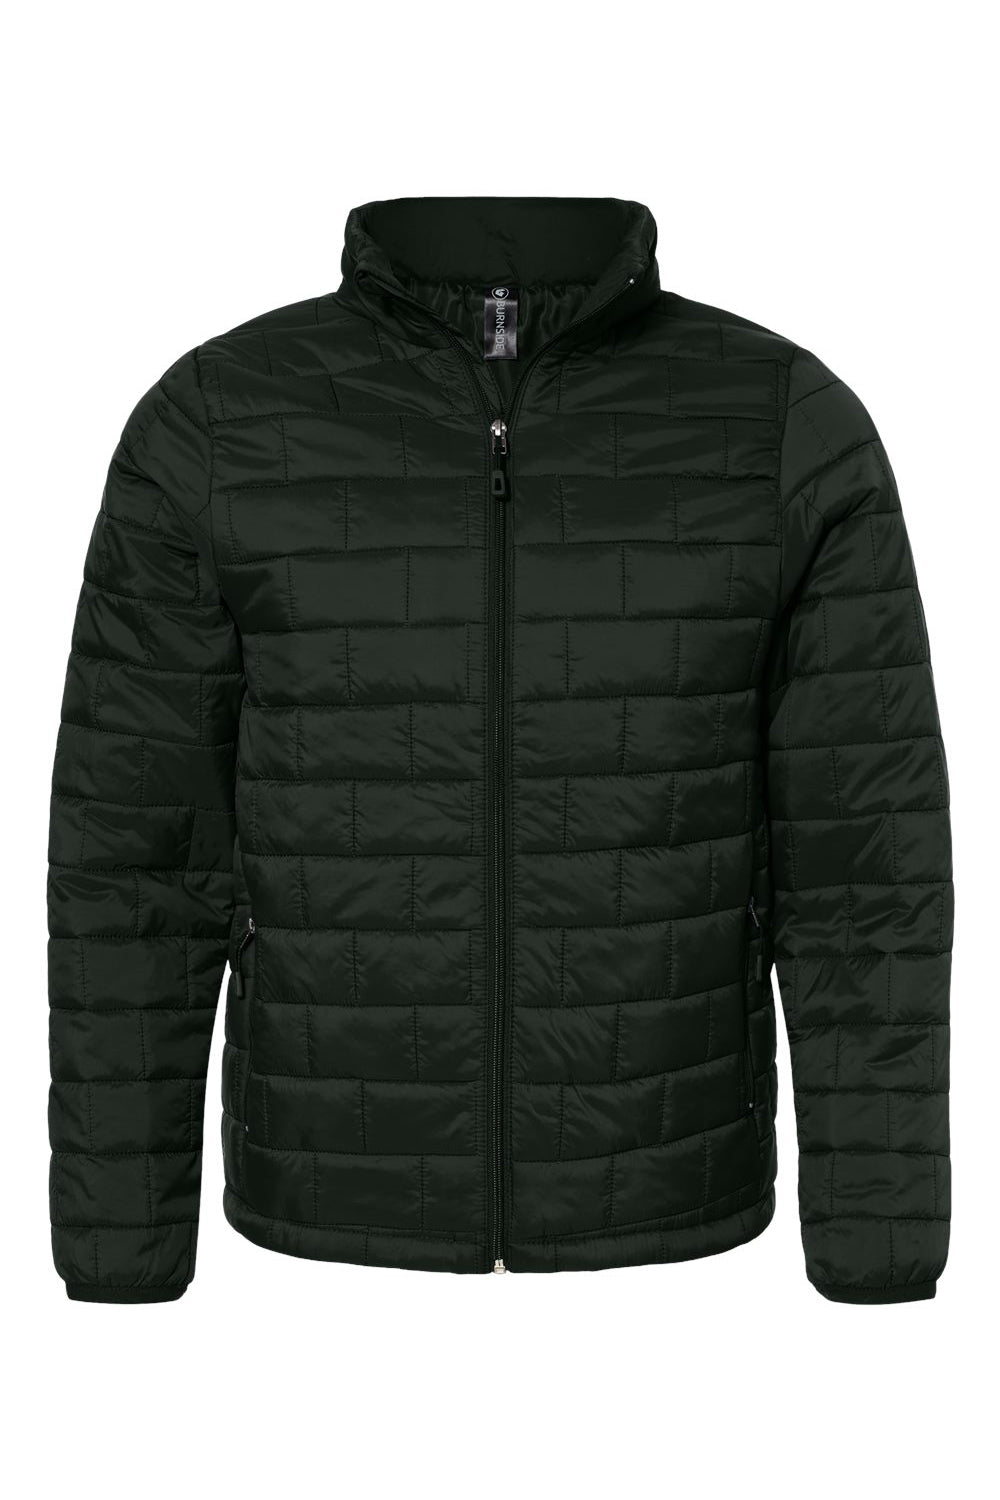 Burnside 8713 Mens Element Full Zip Puffer Jacket Black Flat Front